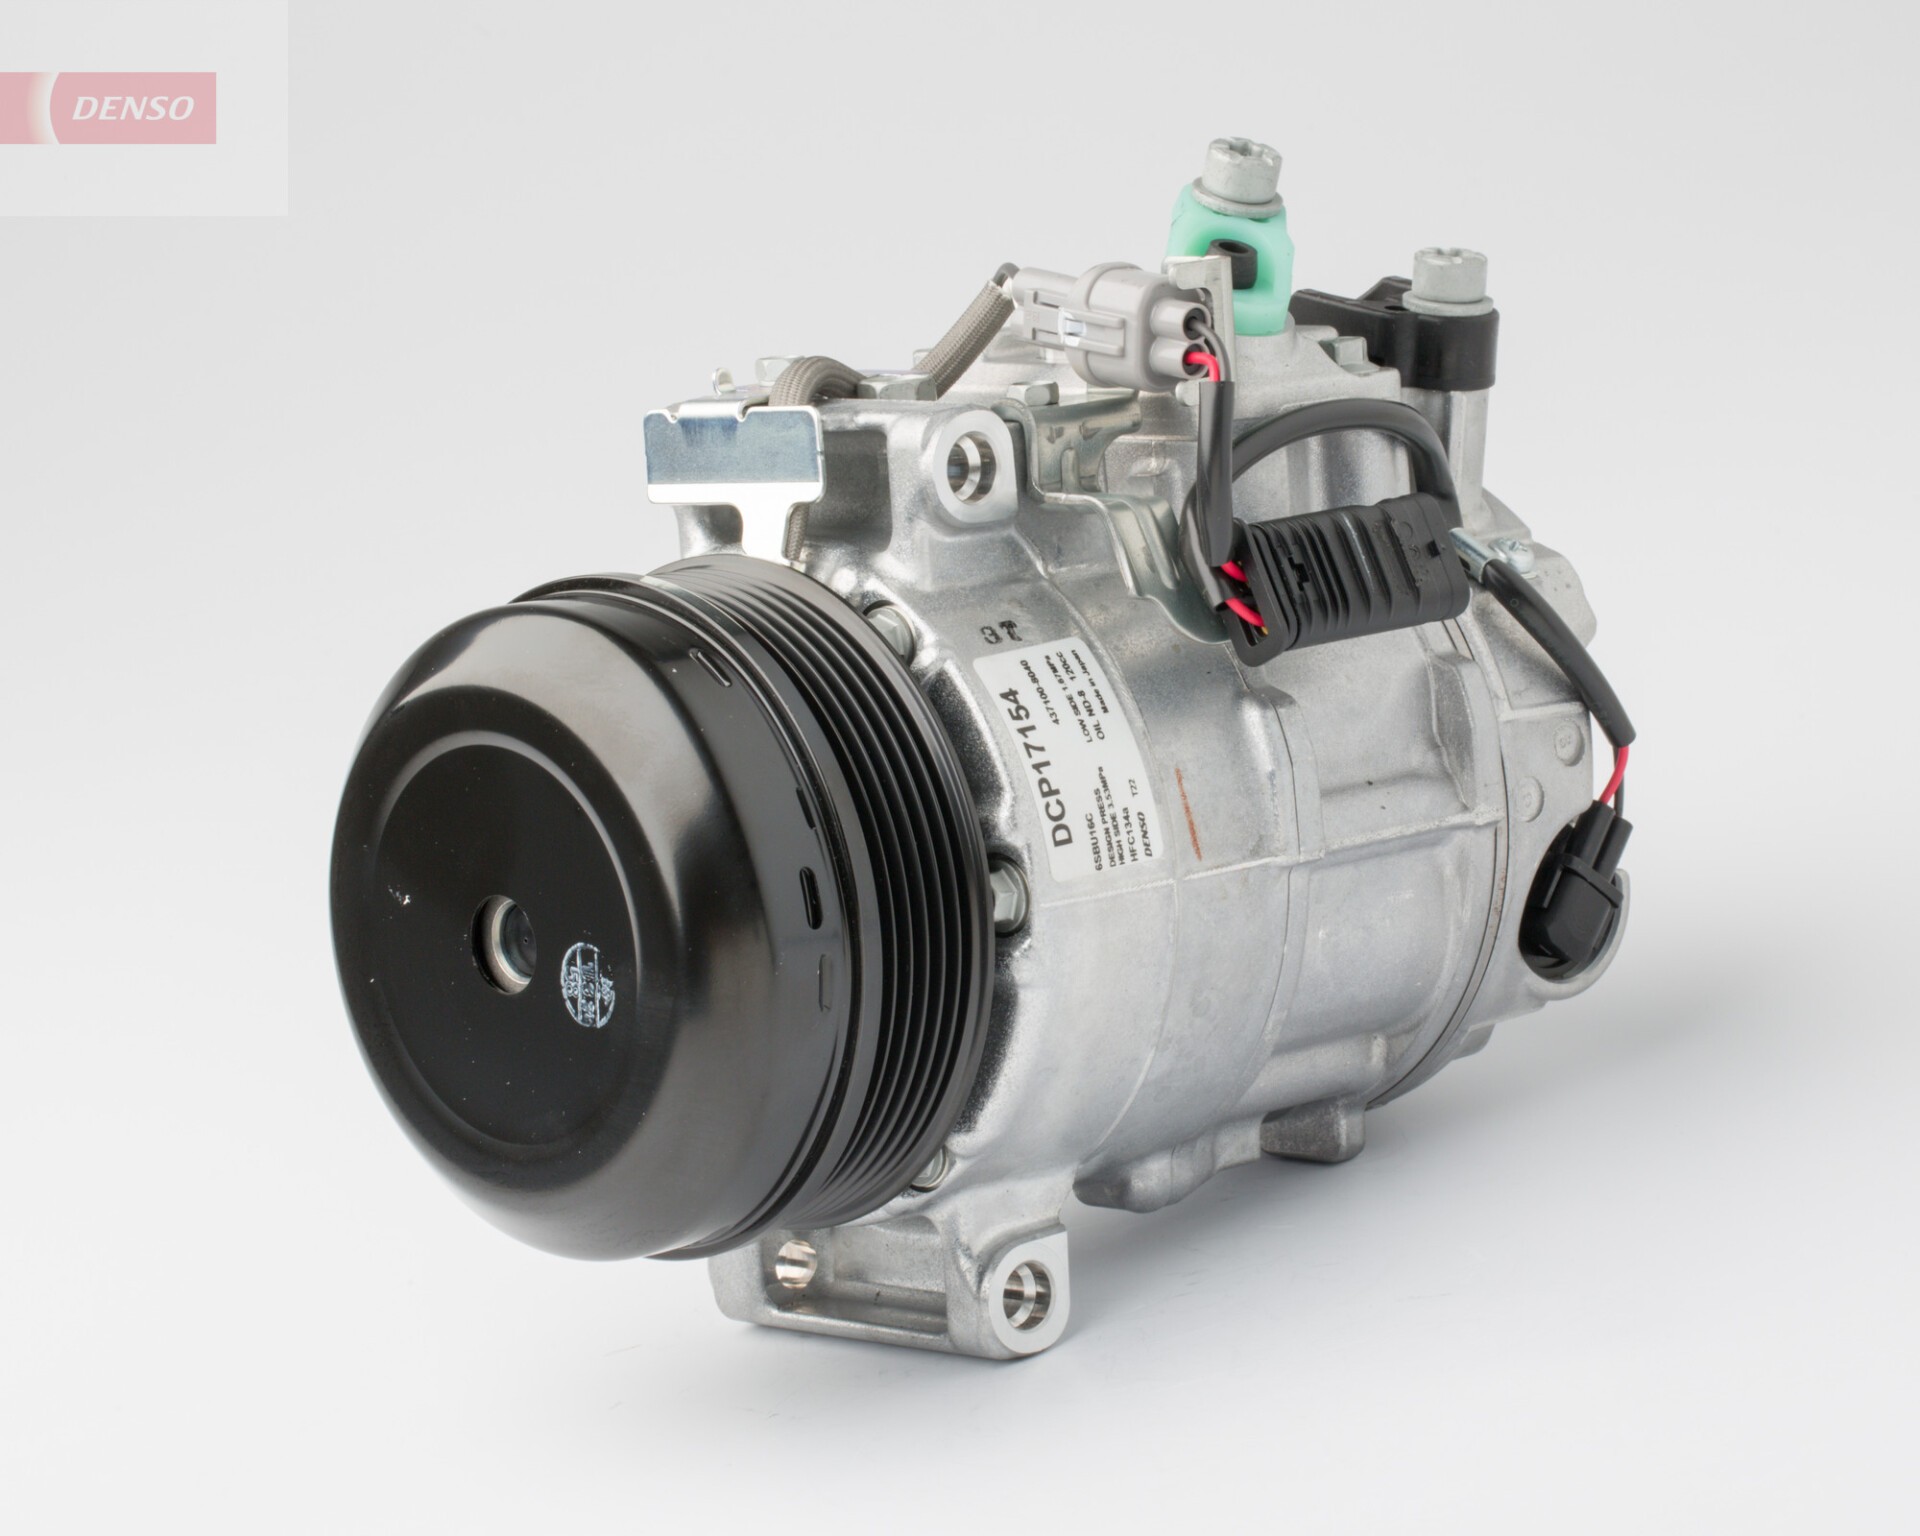 Denso | Klimakompressor geschraubt (DCP17154) für MERCEDES SLK RRENAULT 172